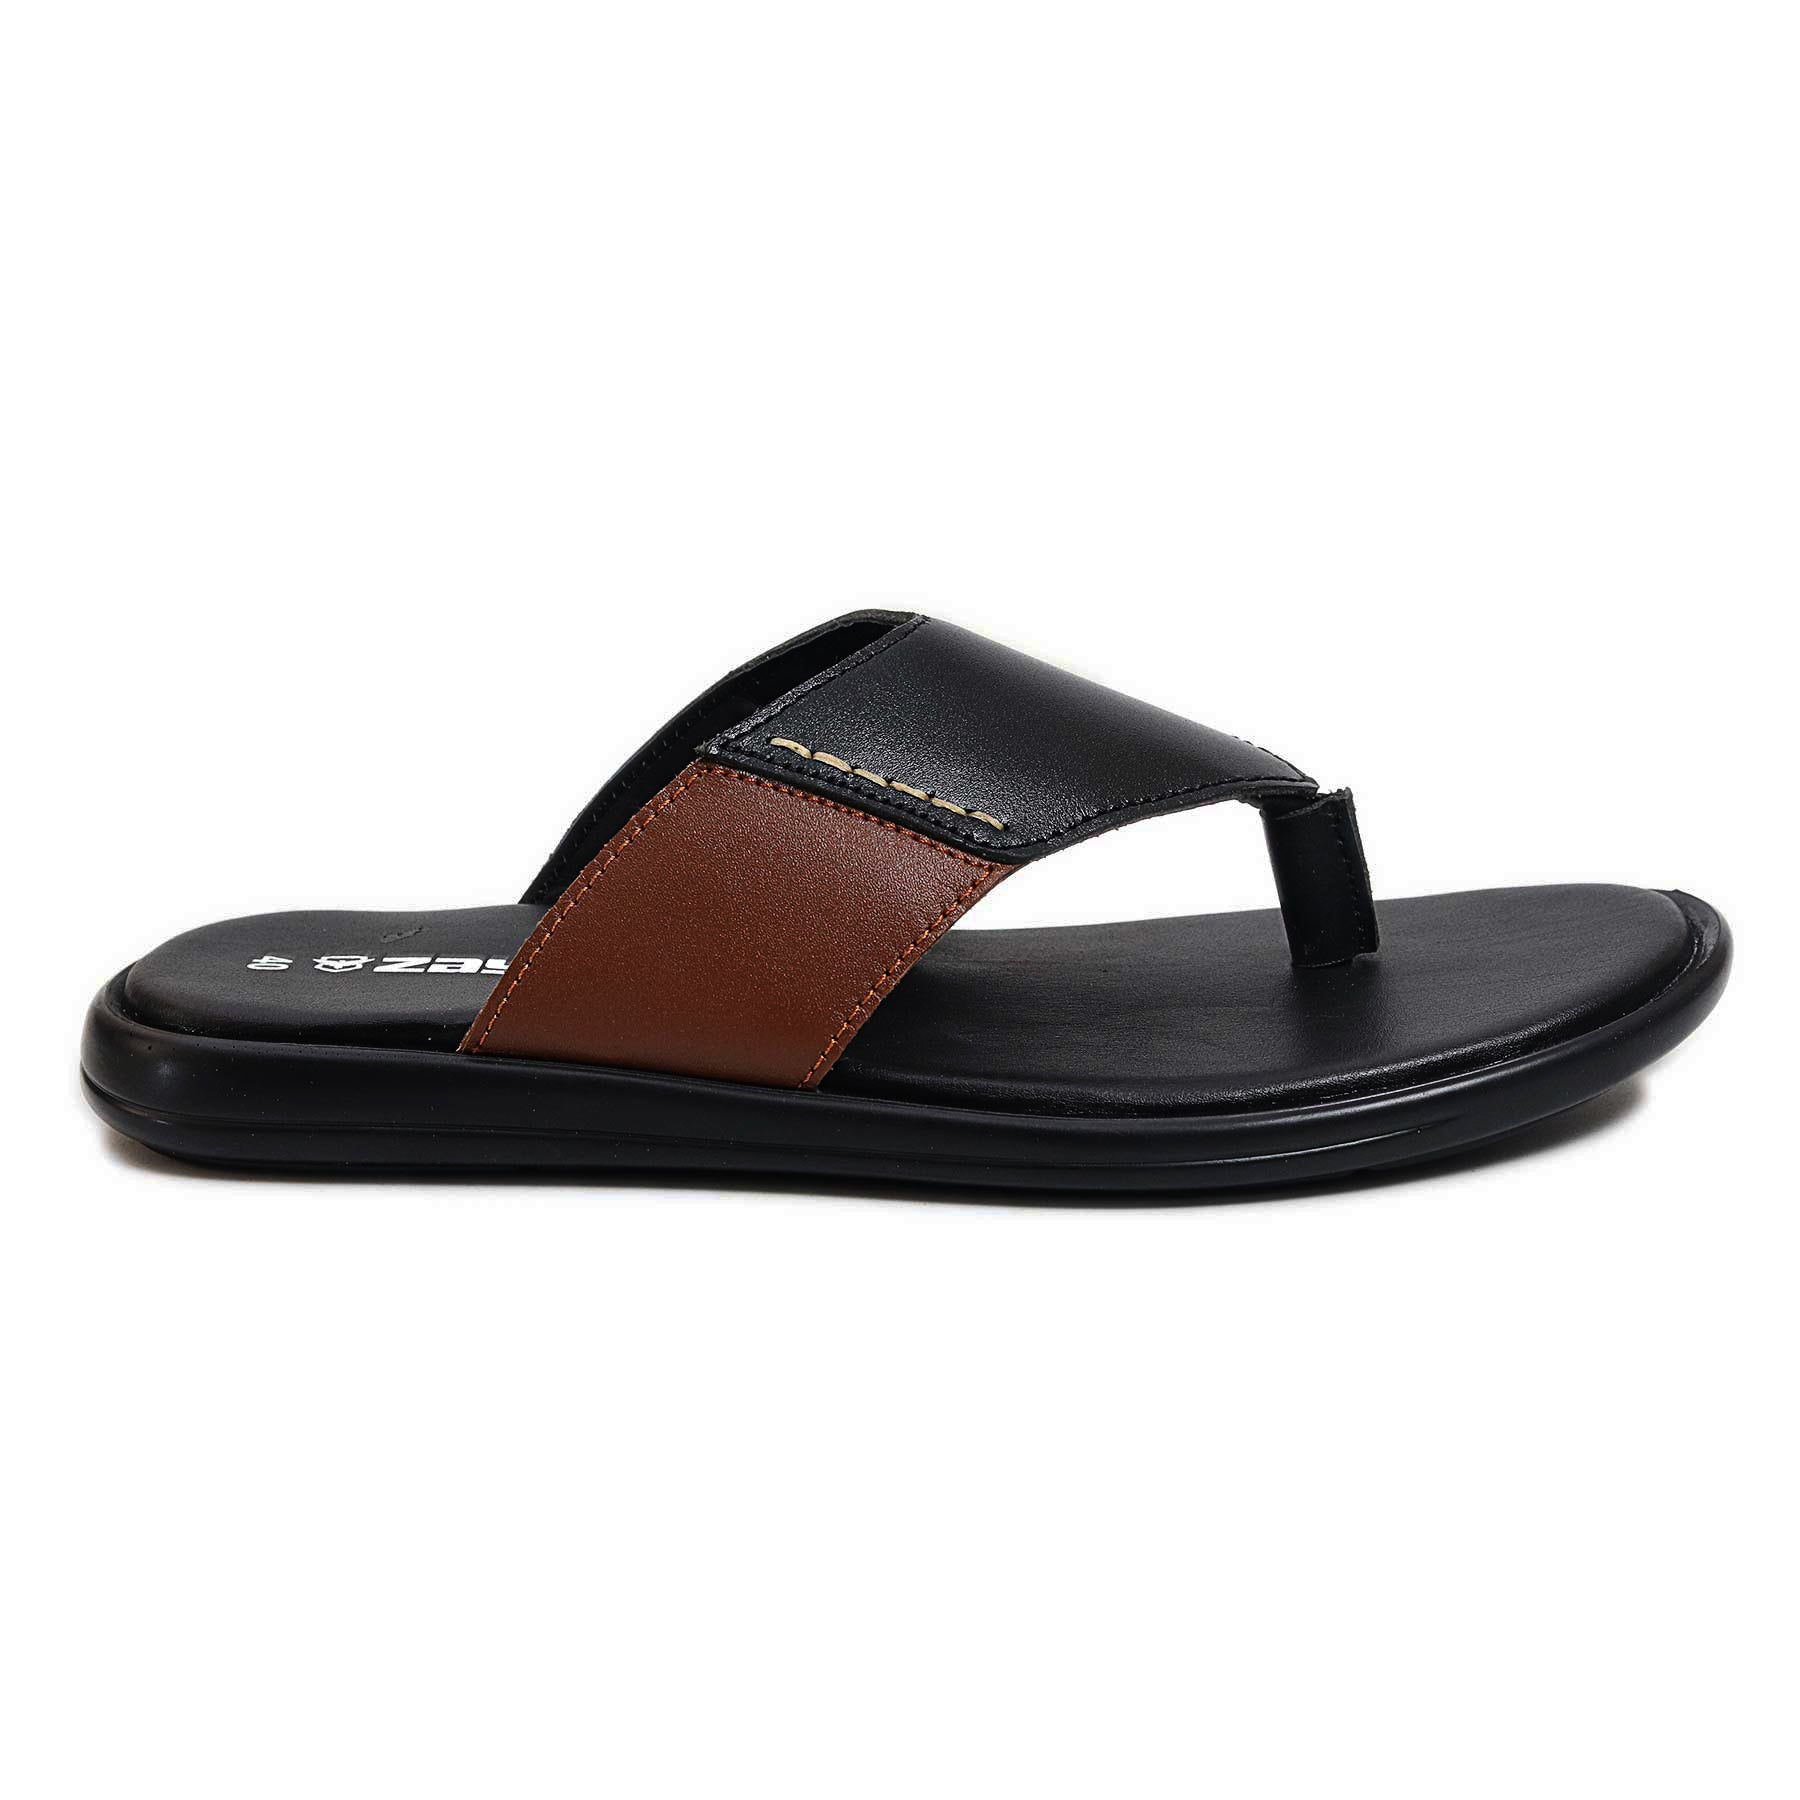 Zays Leather Sandal For Men (Black) - ZA03